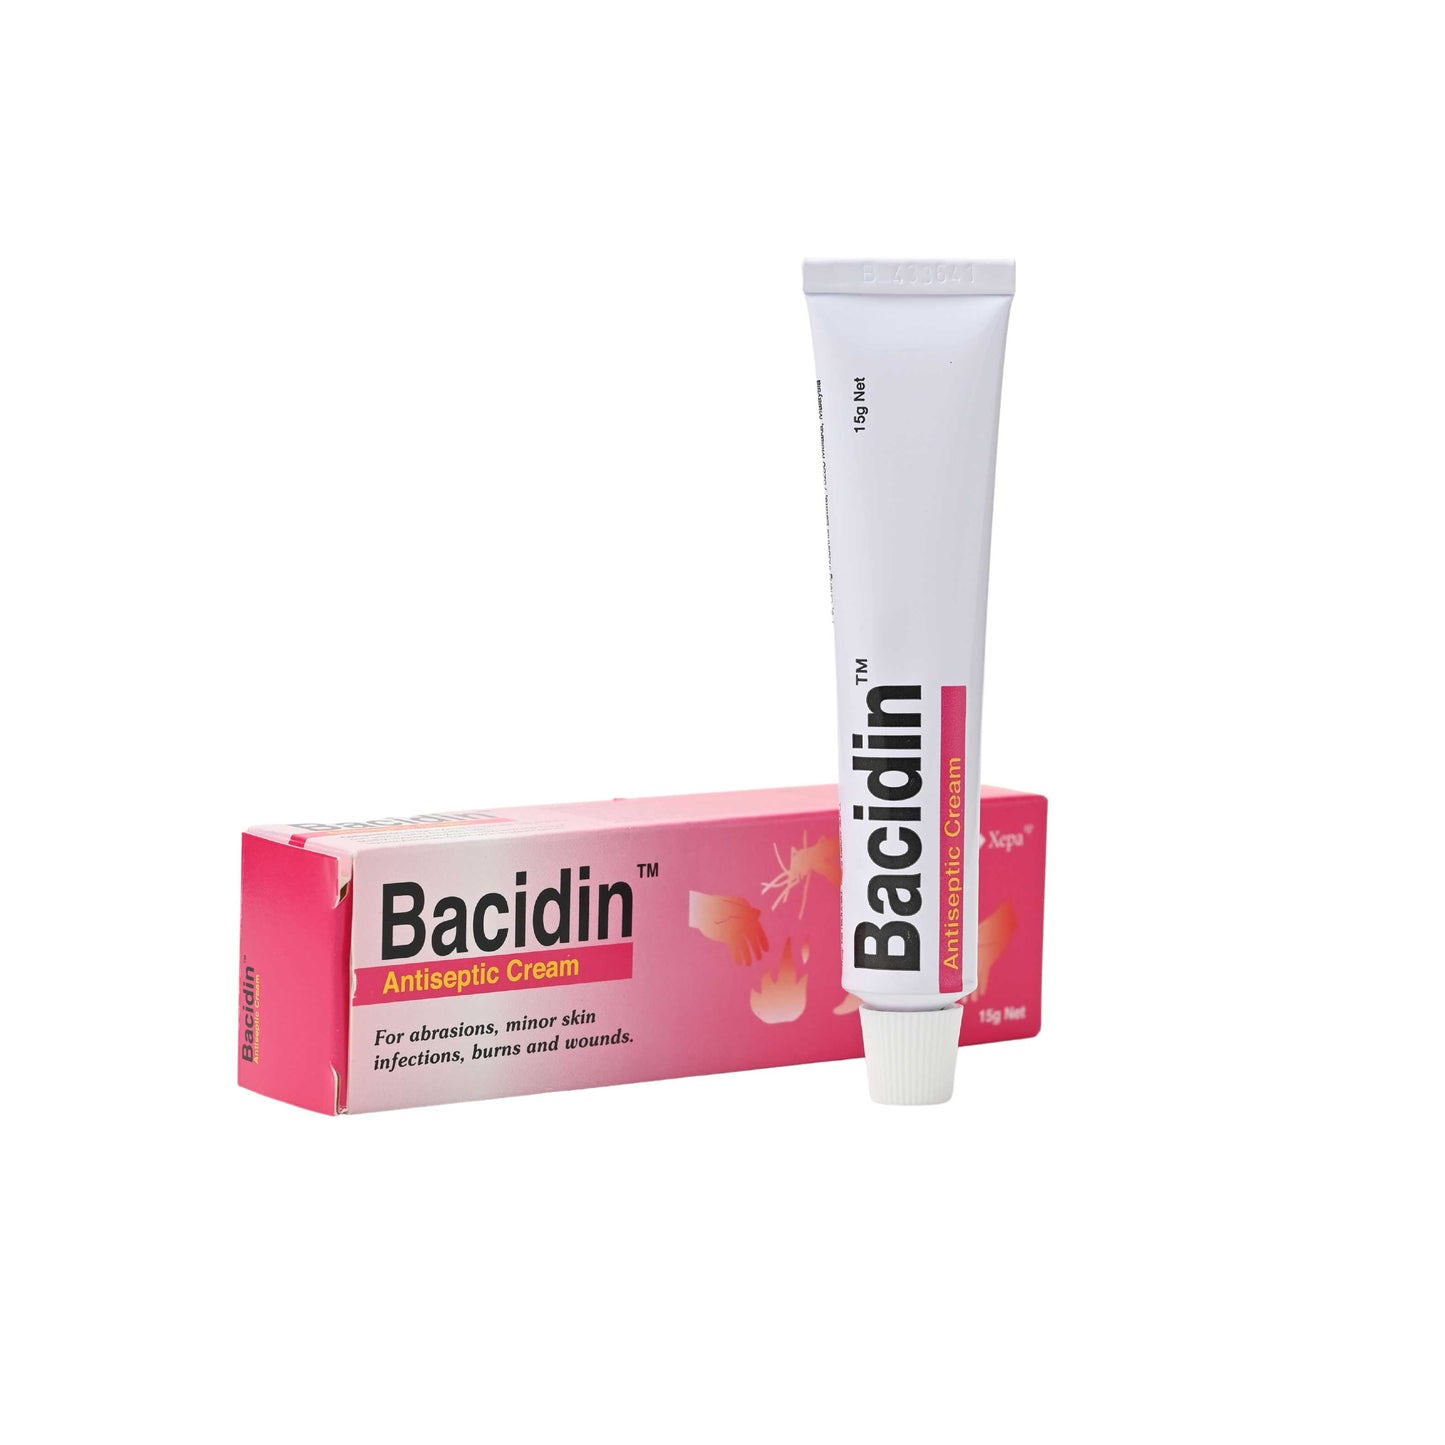 Xepa Bacidin Antiseptic Cream 15g